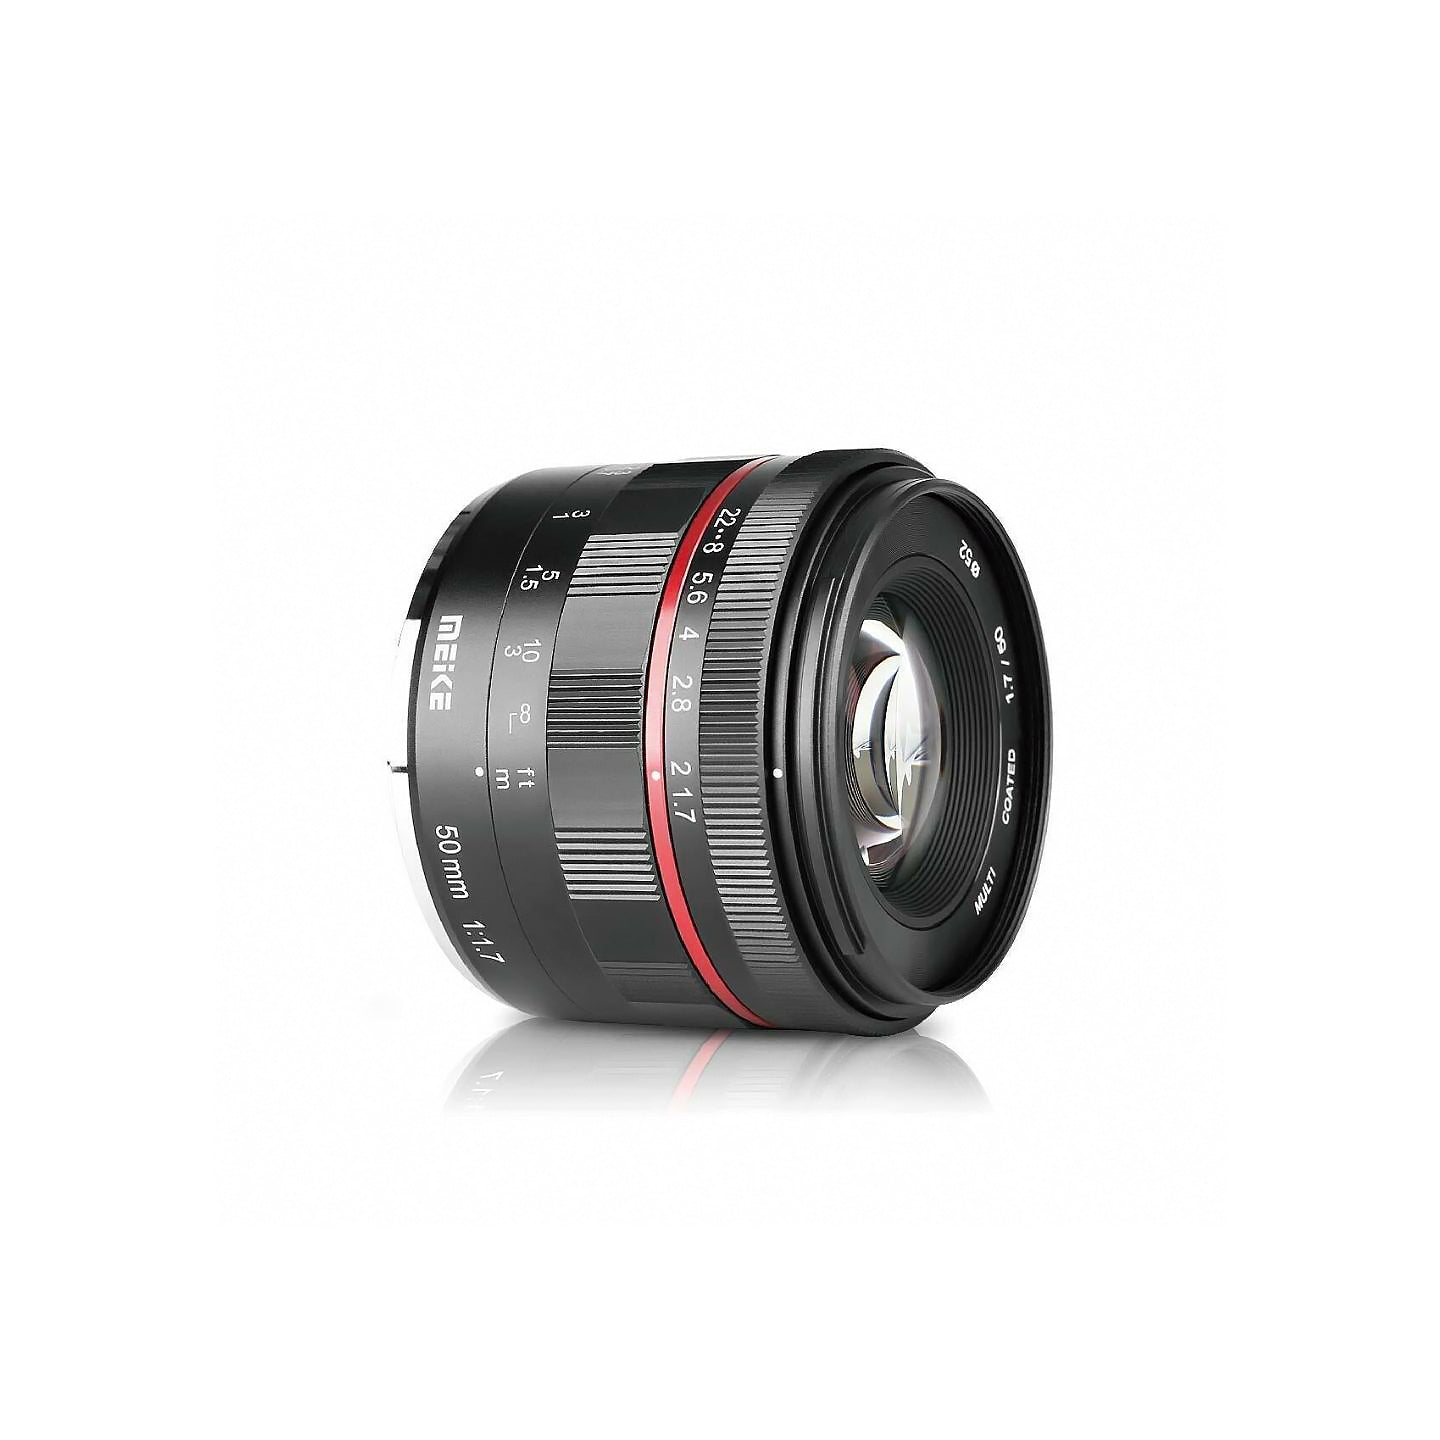 Meike 50mm f/1.7 Full Frame Prime Lens with Manual Focus Mode for